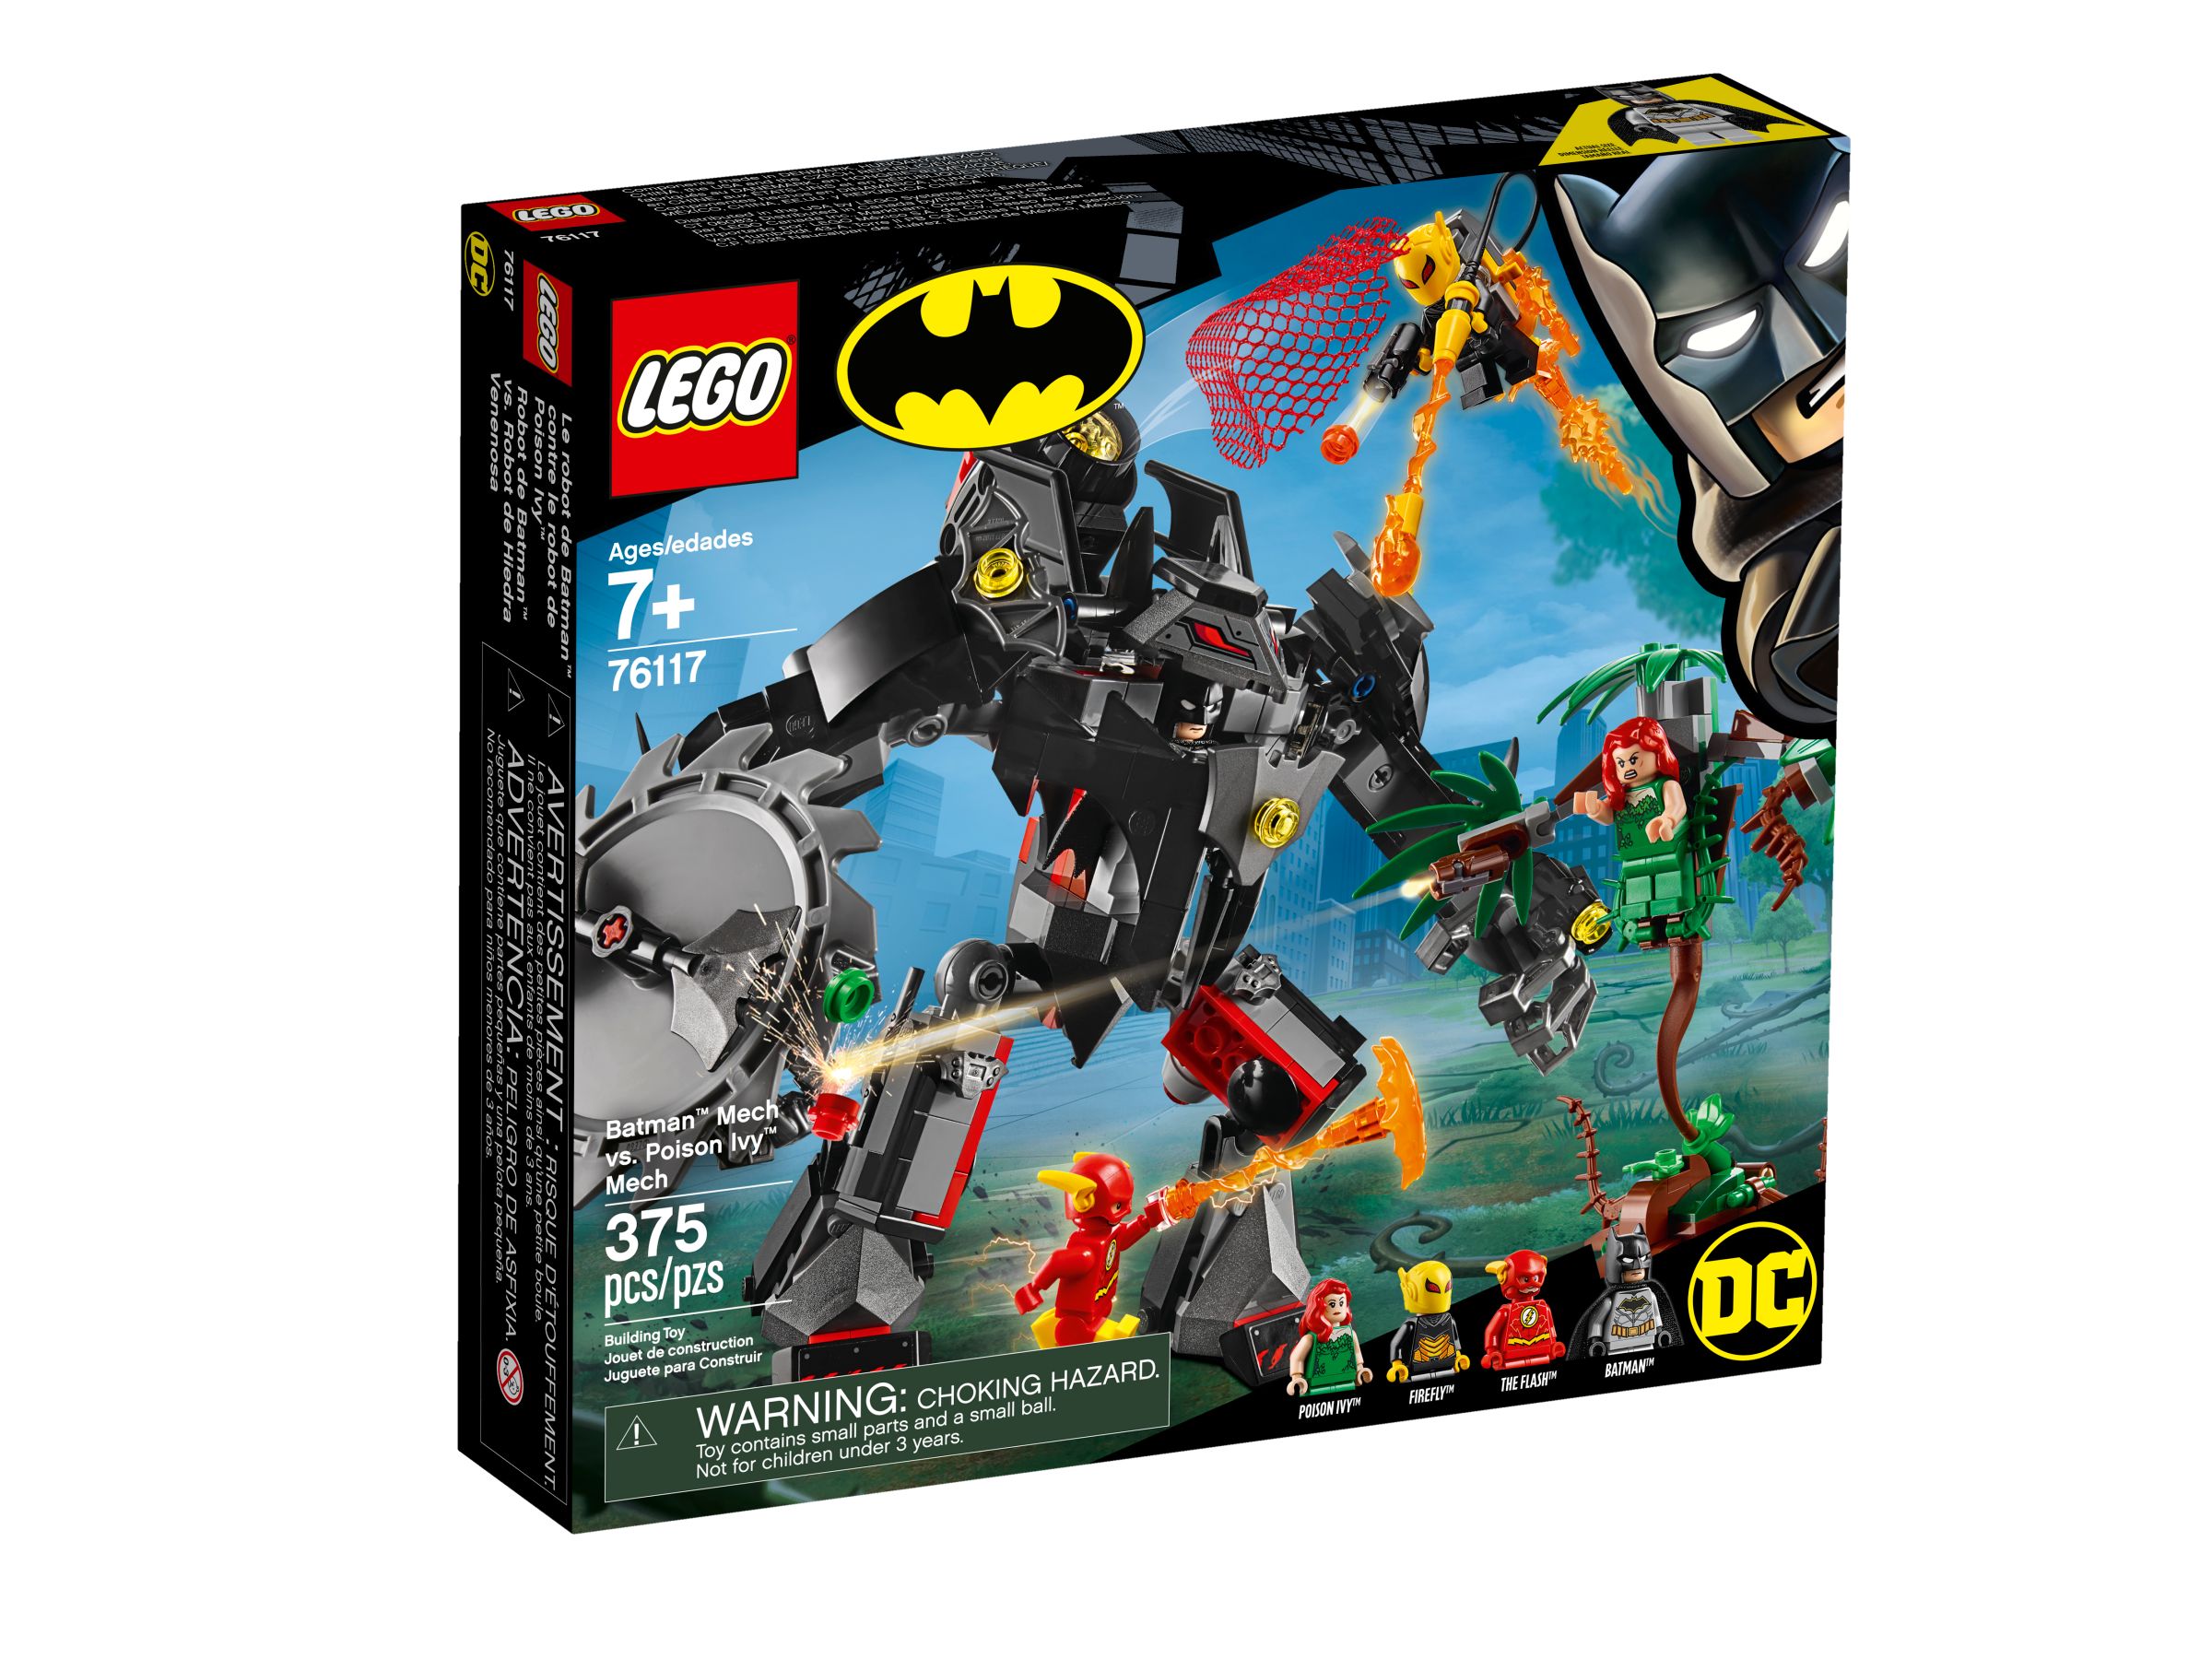 LEGO Super Heroes 76117 Batman™ Mech vs. Poison Ivy™ Mech LEGO_76117_alt1.jpg